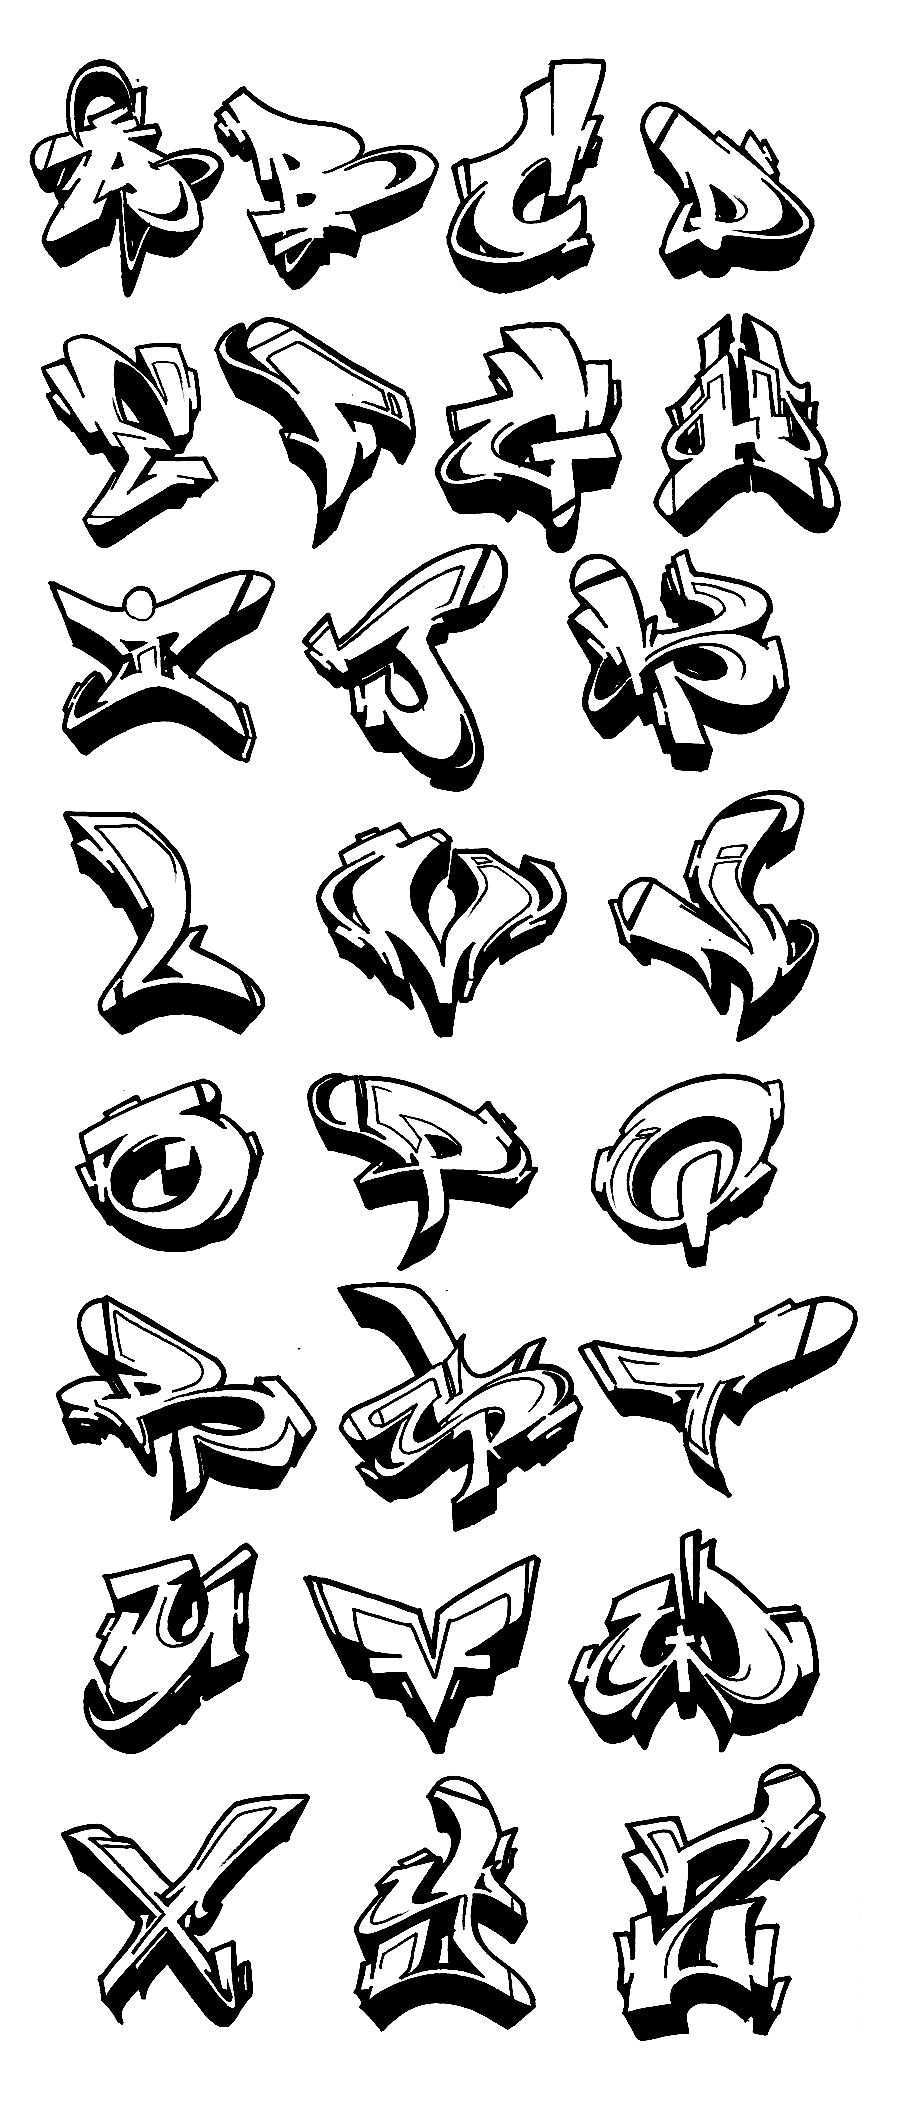 Graffiti Alphabet Wildstyle A Z 3d Graffiti Collection Graffiti Art Letters Graffiti Alphabet Graffiti Alphabet Styles